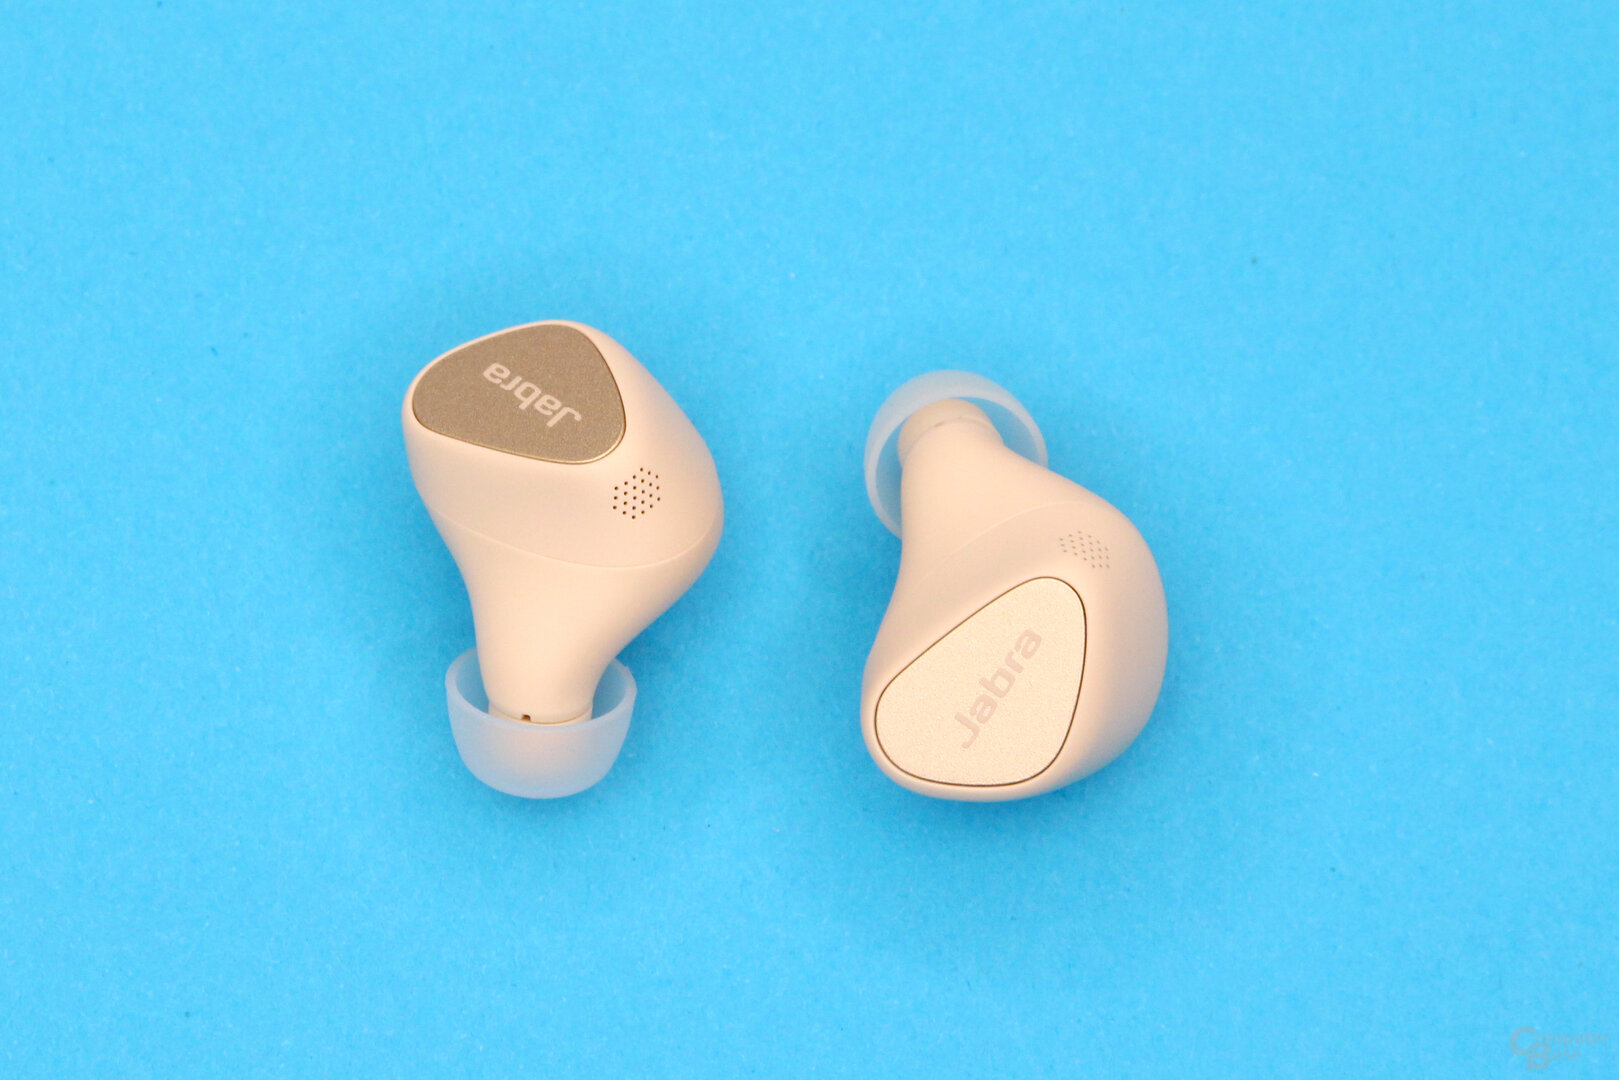 Jabra Elite 5 kabellose In-Ear-Kopfhörer im Test - ComputerBase